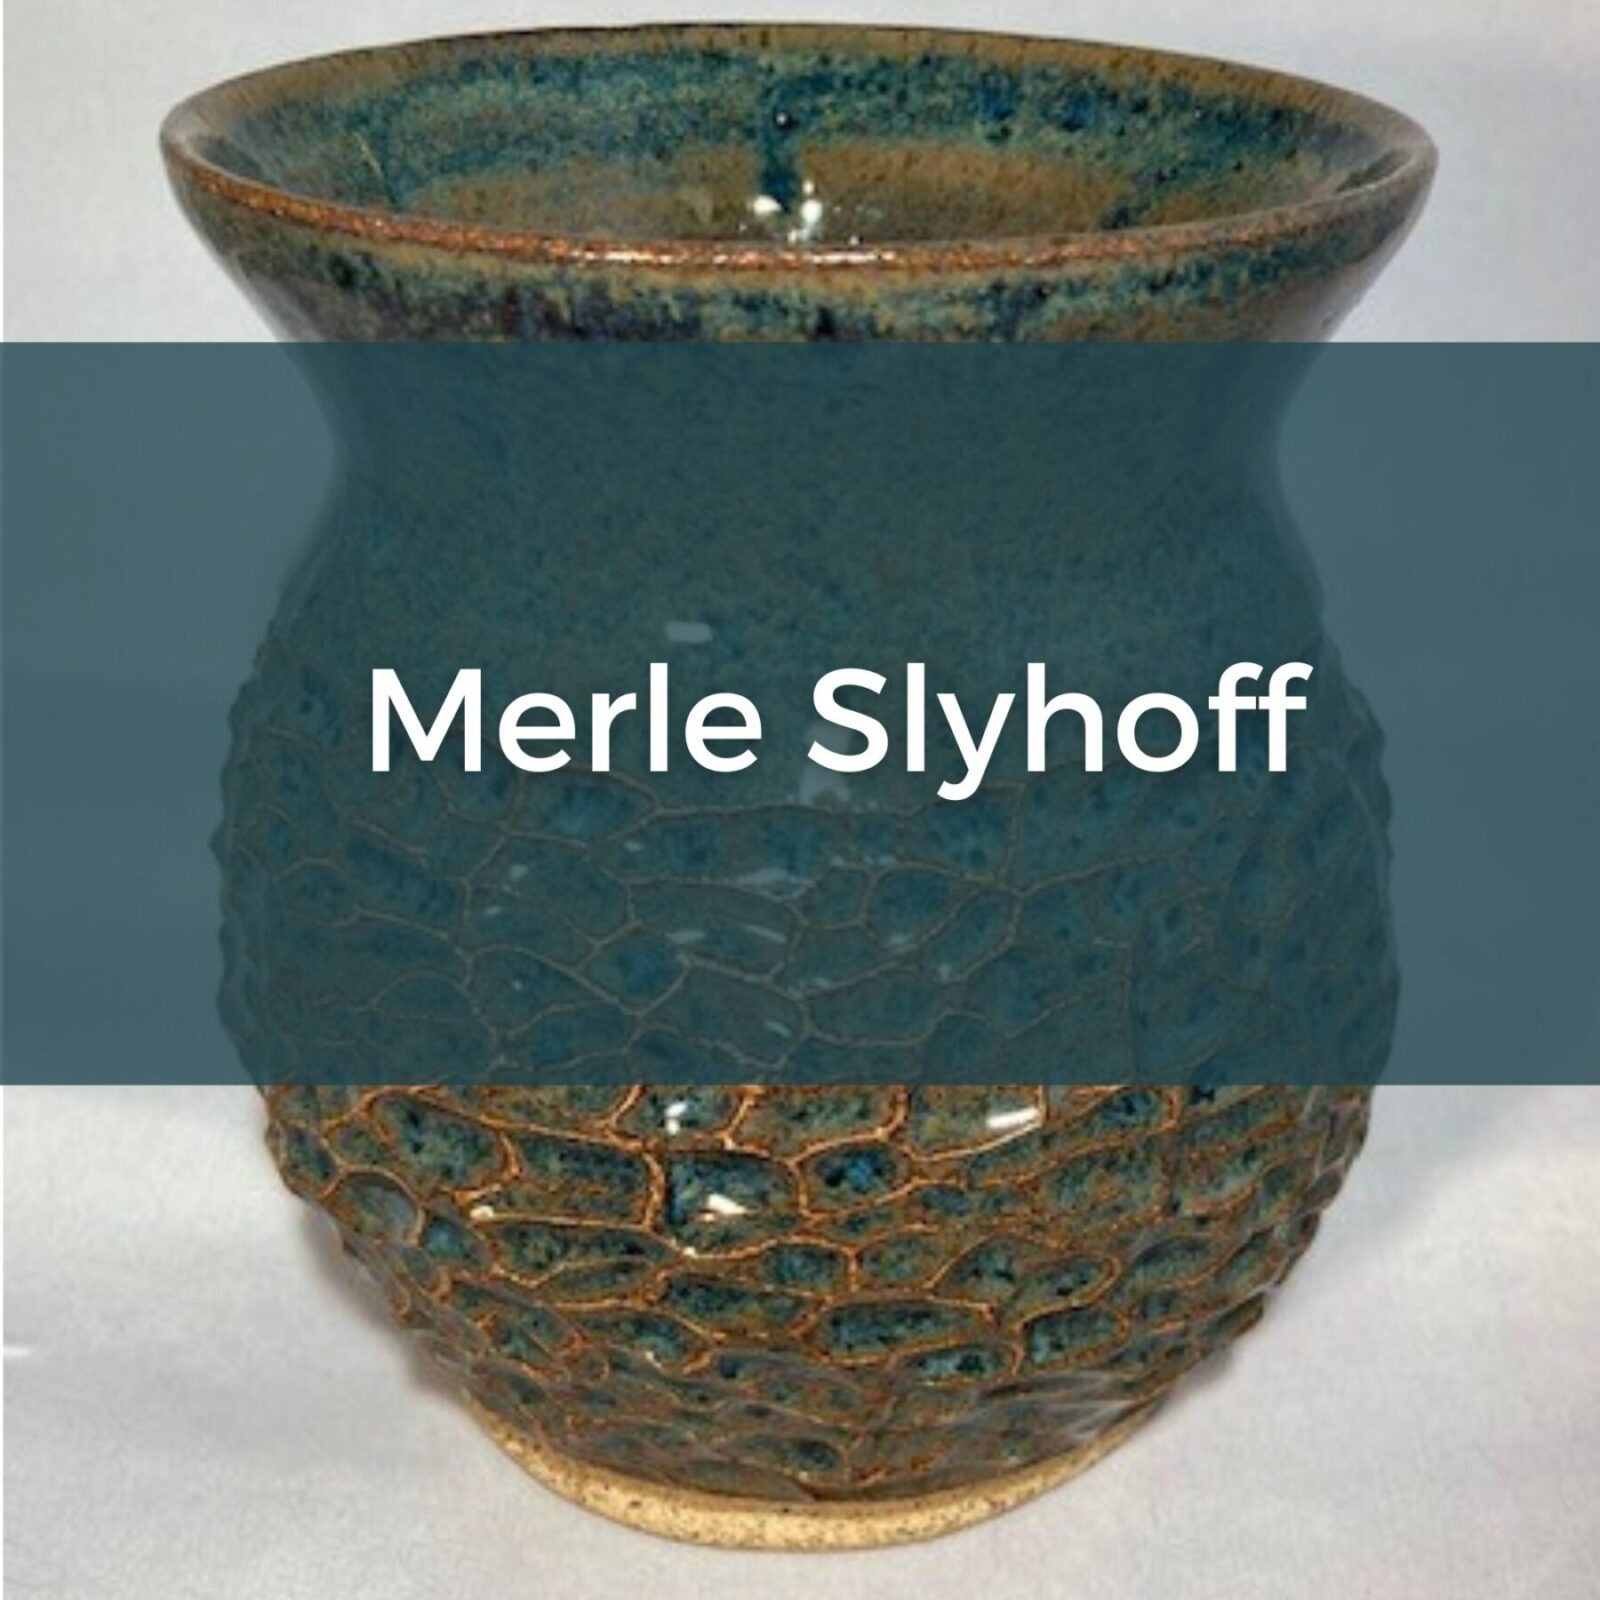 Merle Slyhoff, pottery